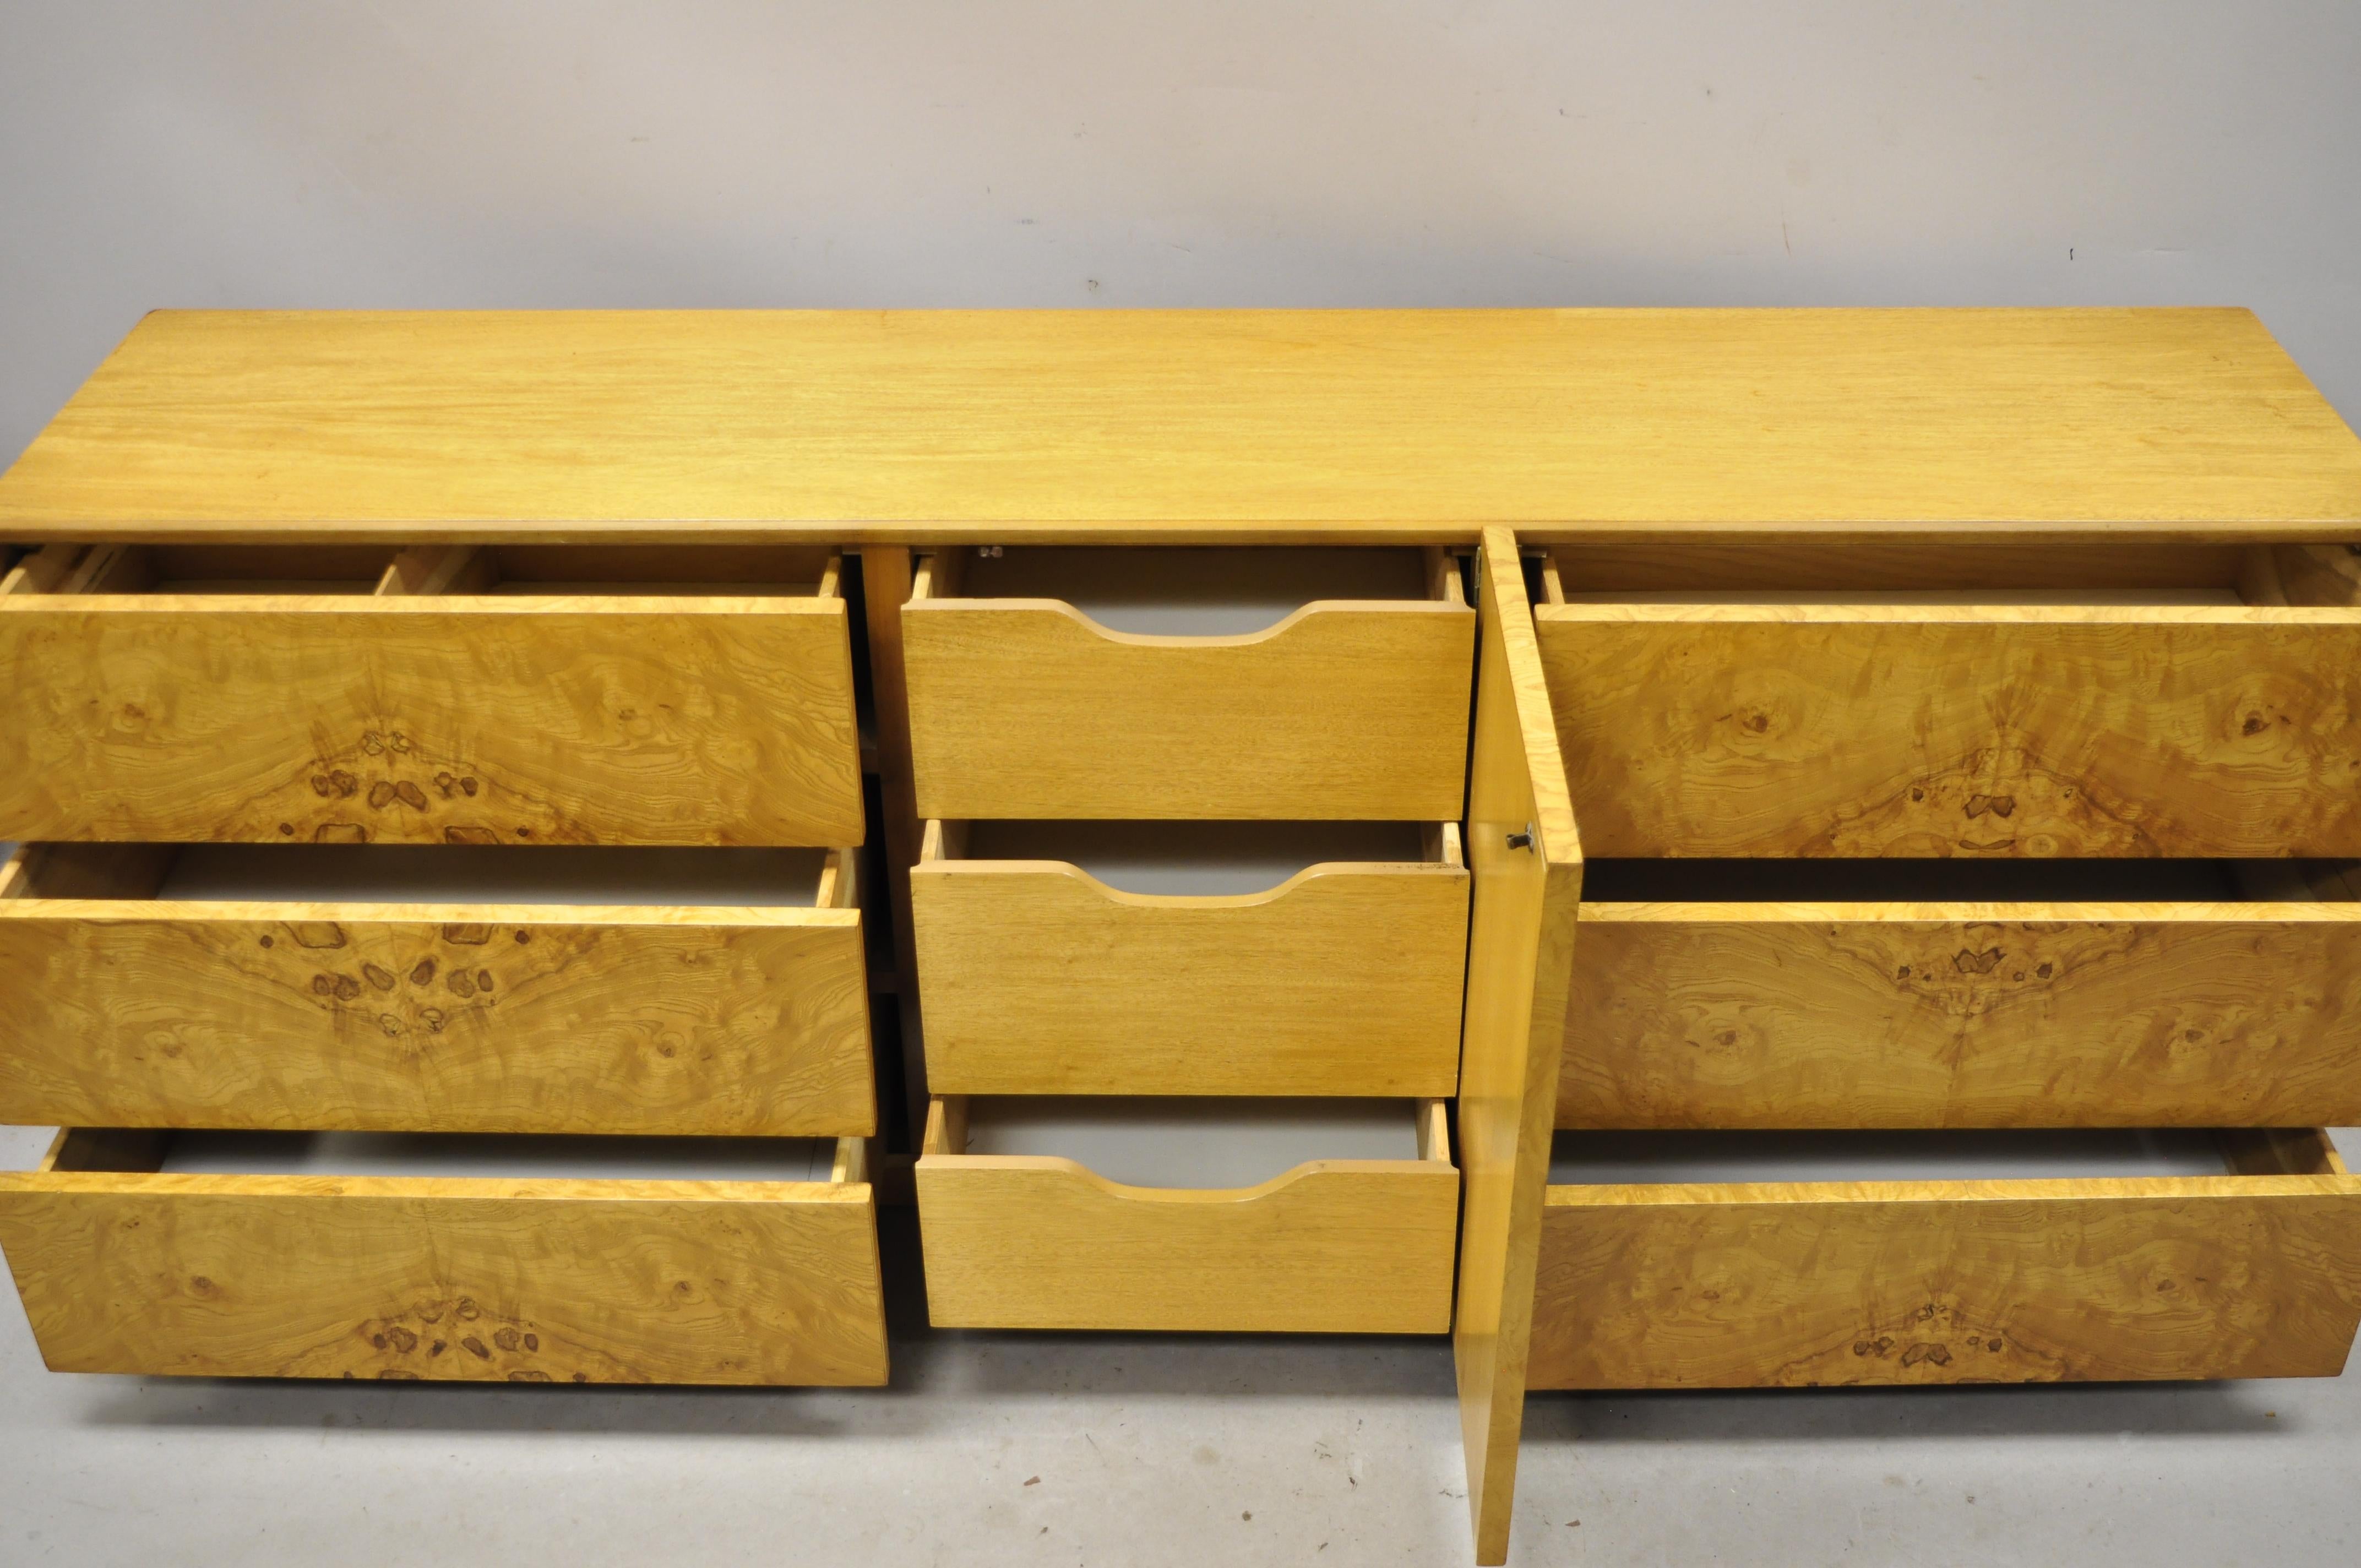 North American Mid-Century Modern Burl Wood Long Dresser Credenza Cabinet by Lane Furniture